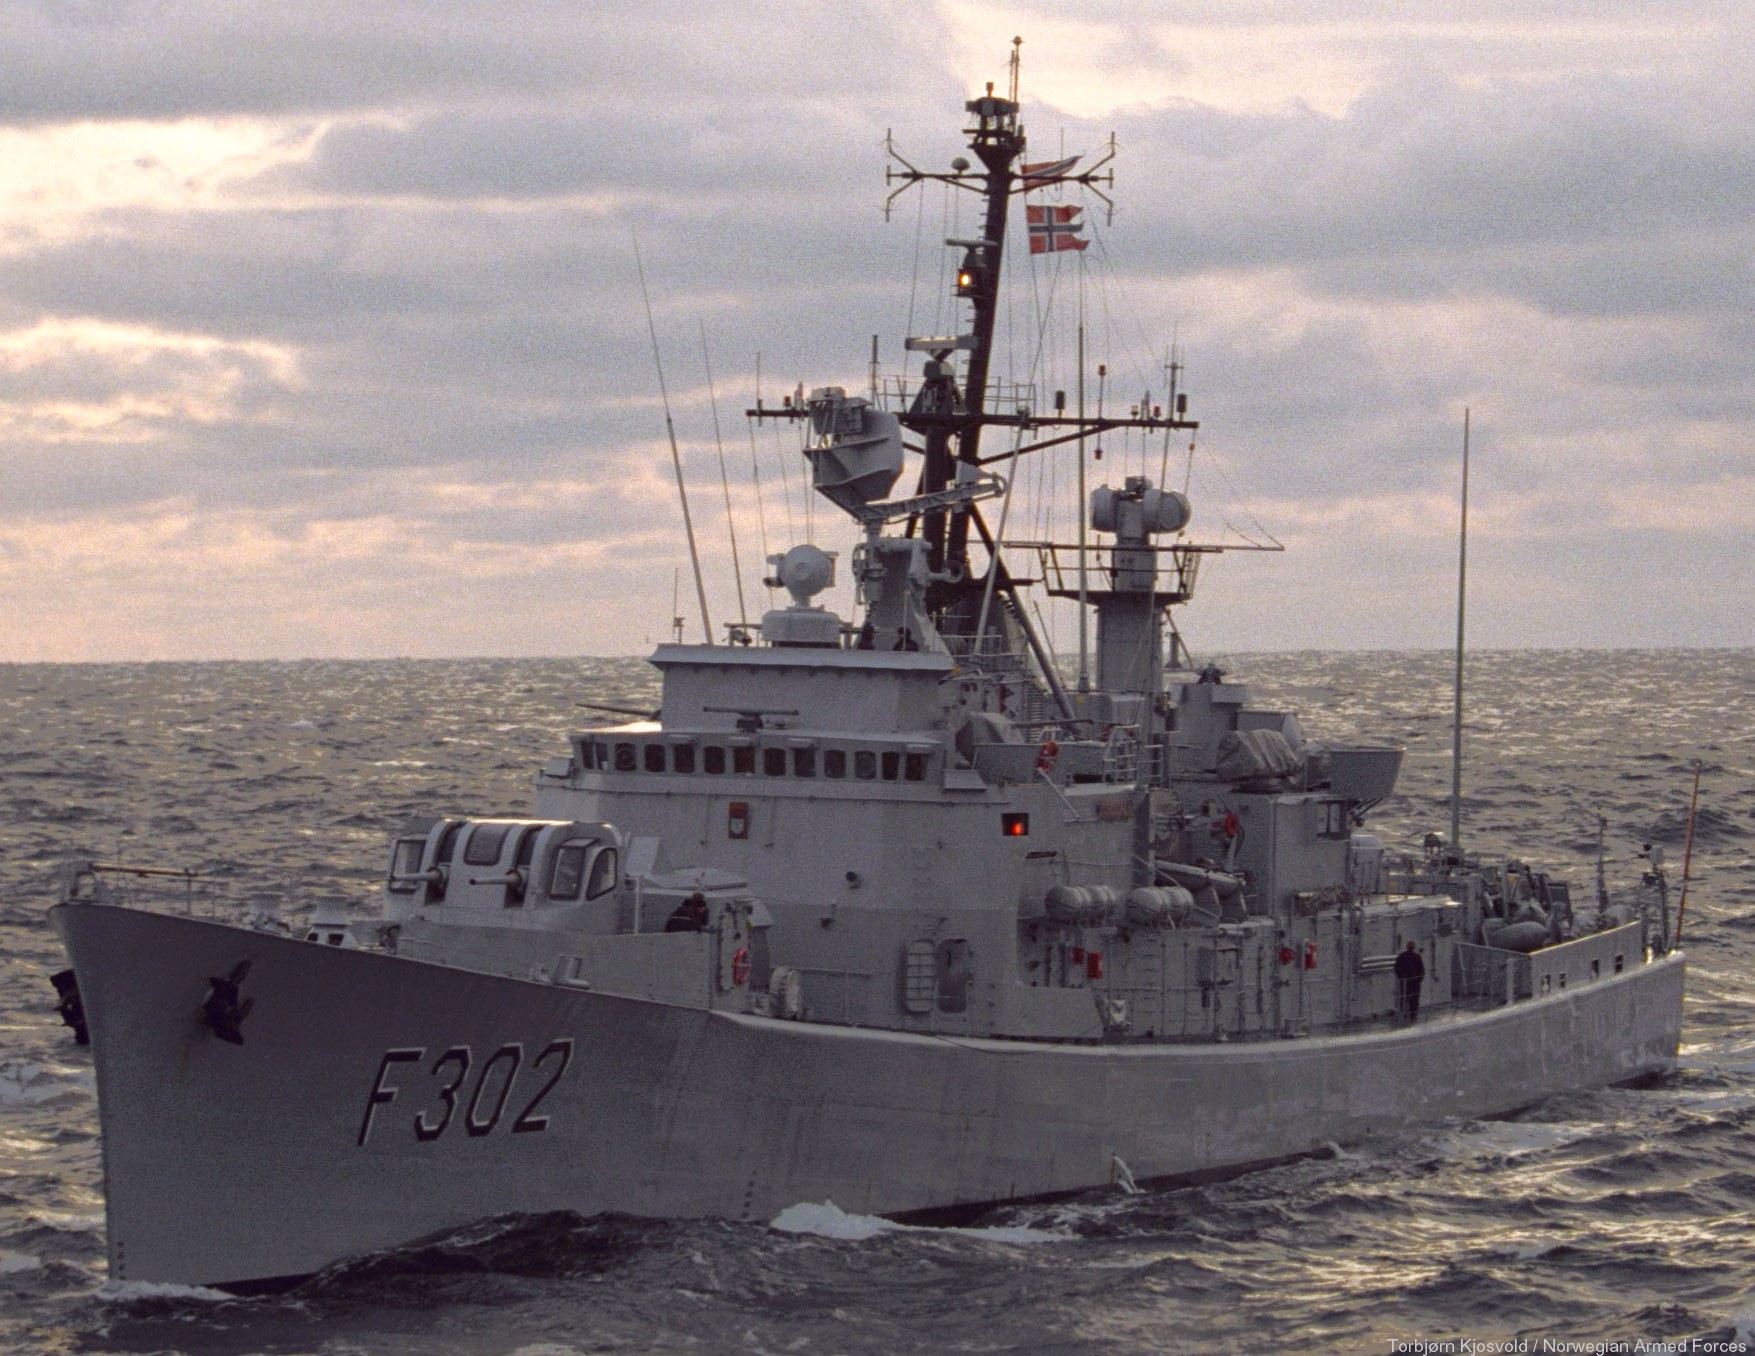 f-302 hnoms trondheim knm oslo class frigate royal norwegian navy sjoforsvaret 16